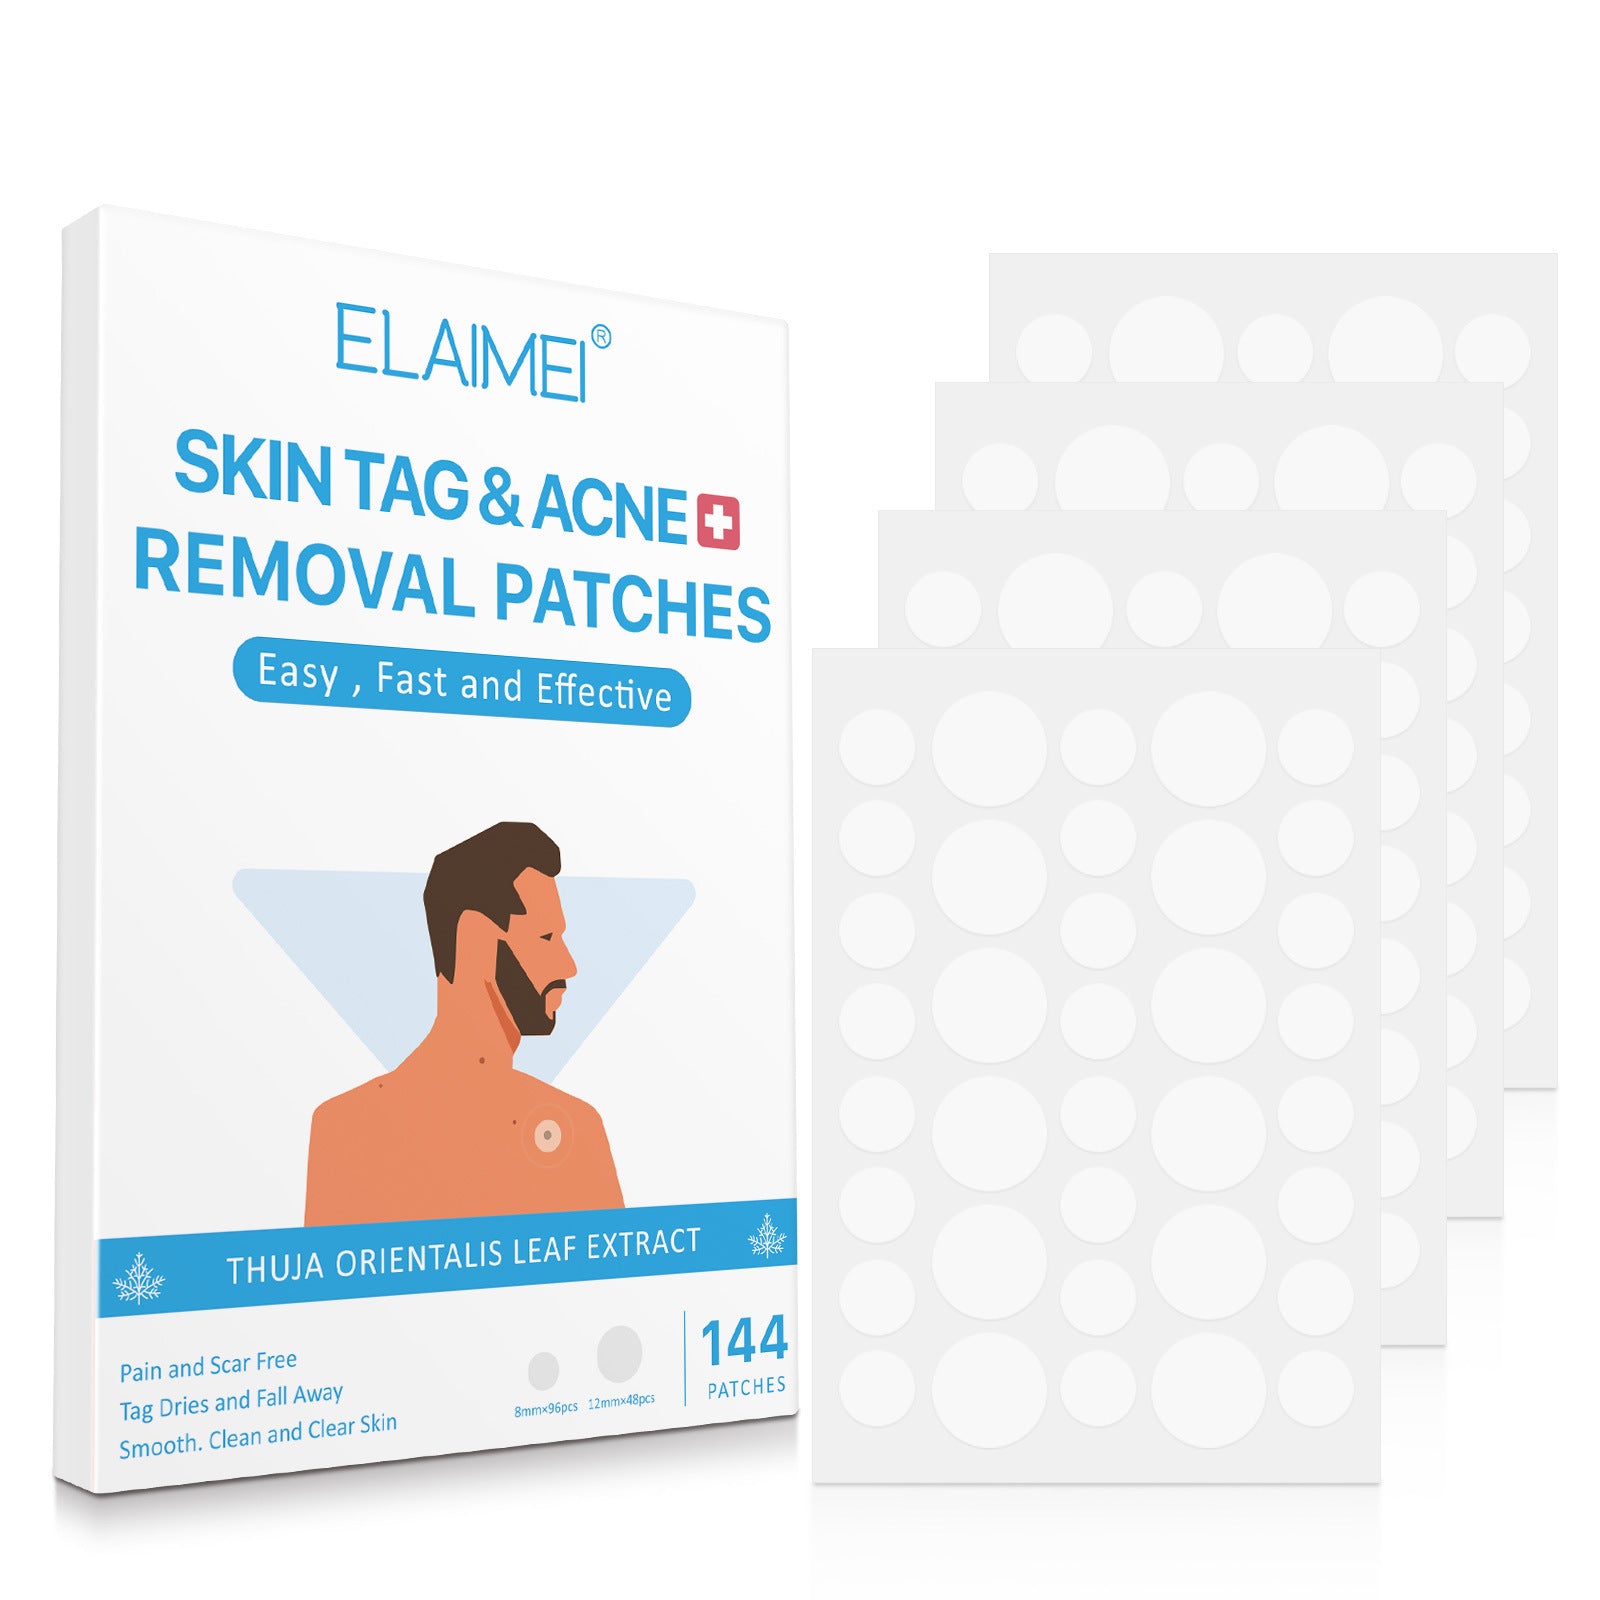 Excluziva™ Elamei Skin Tag Patches® 144pcs